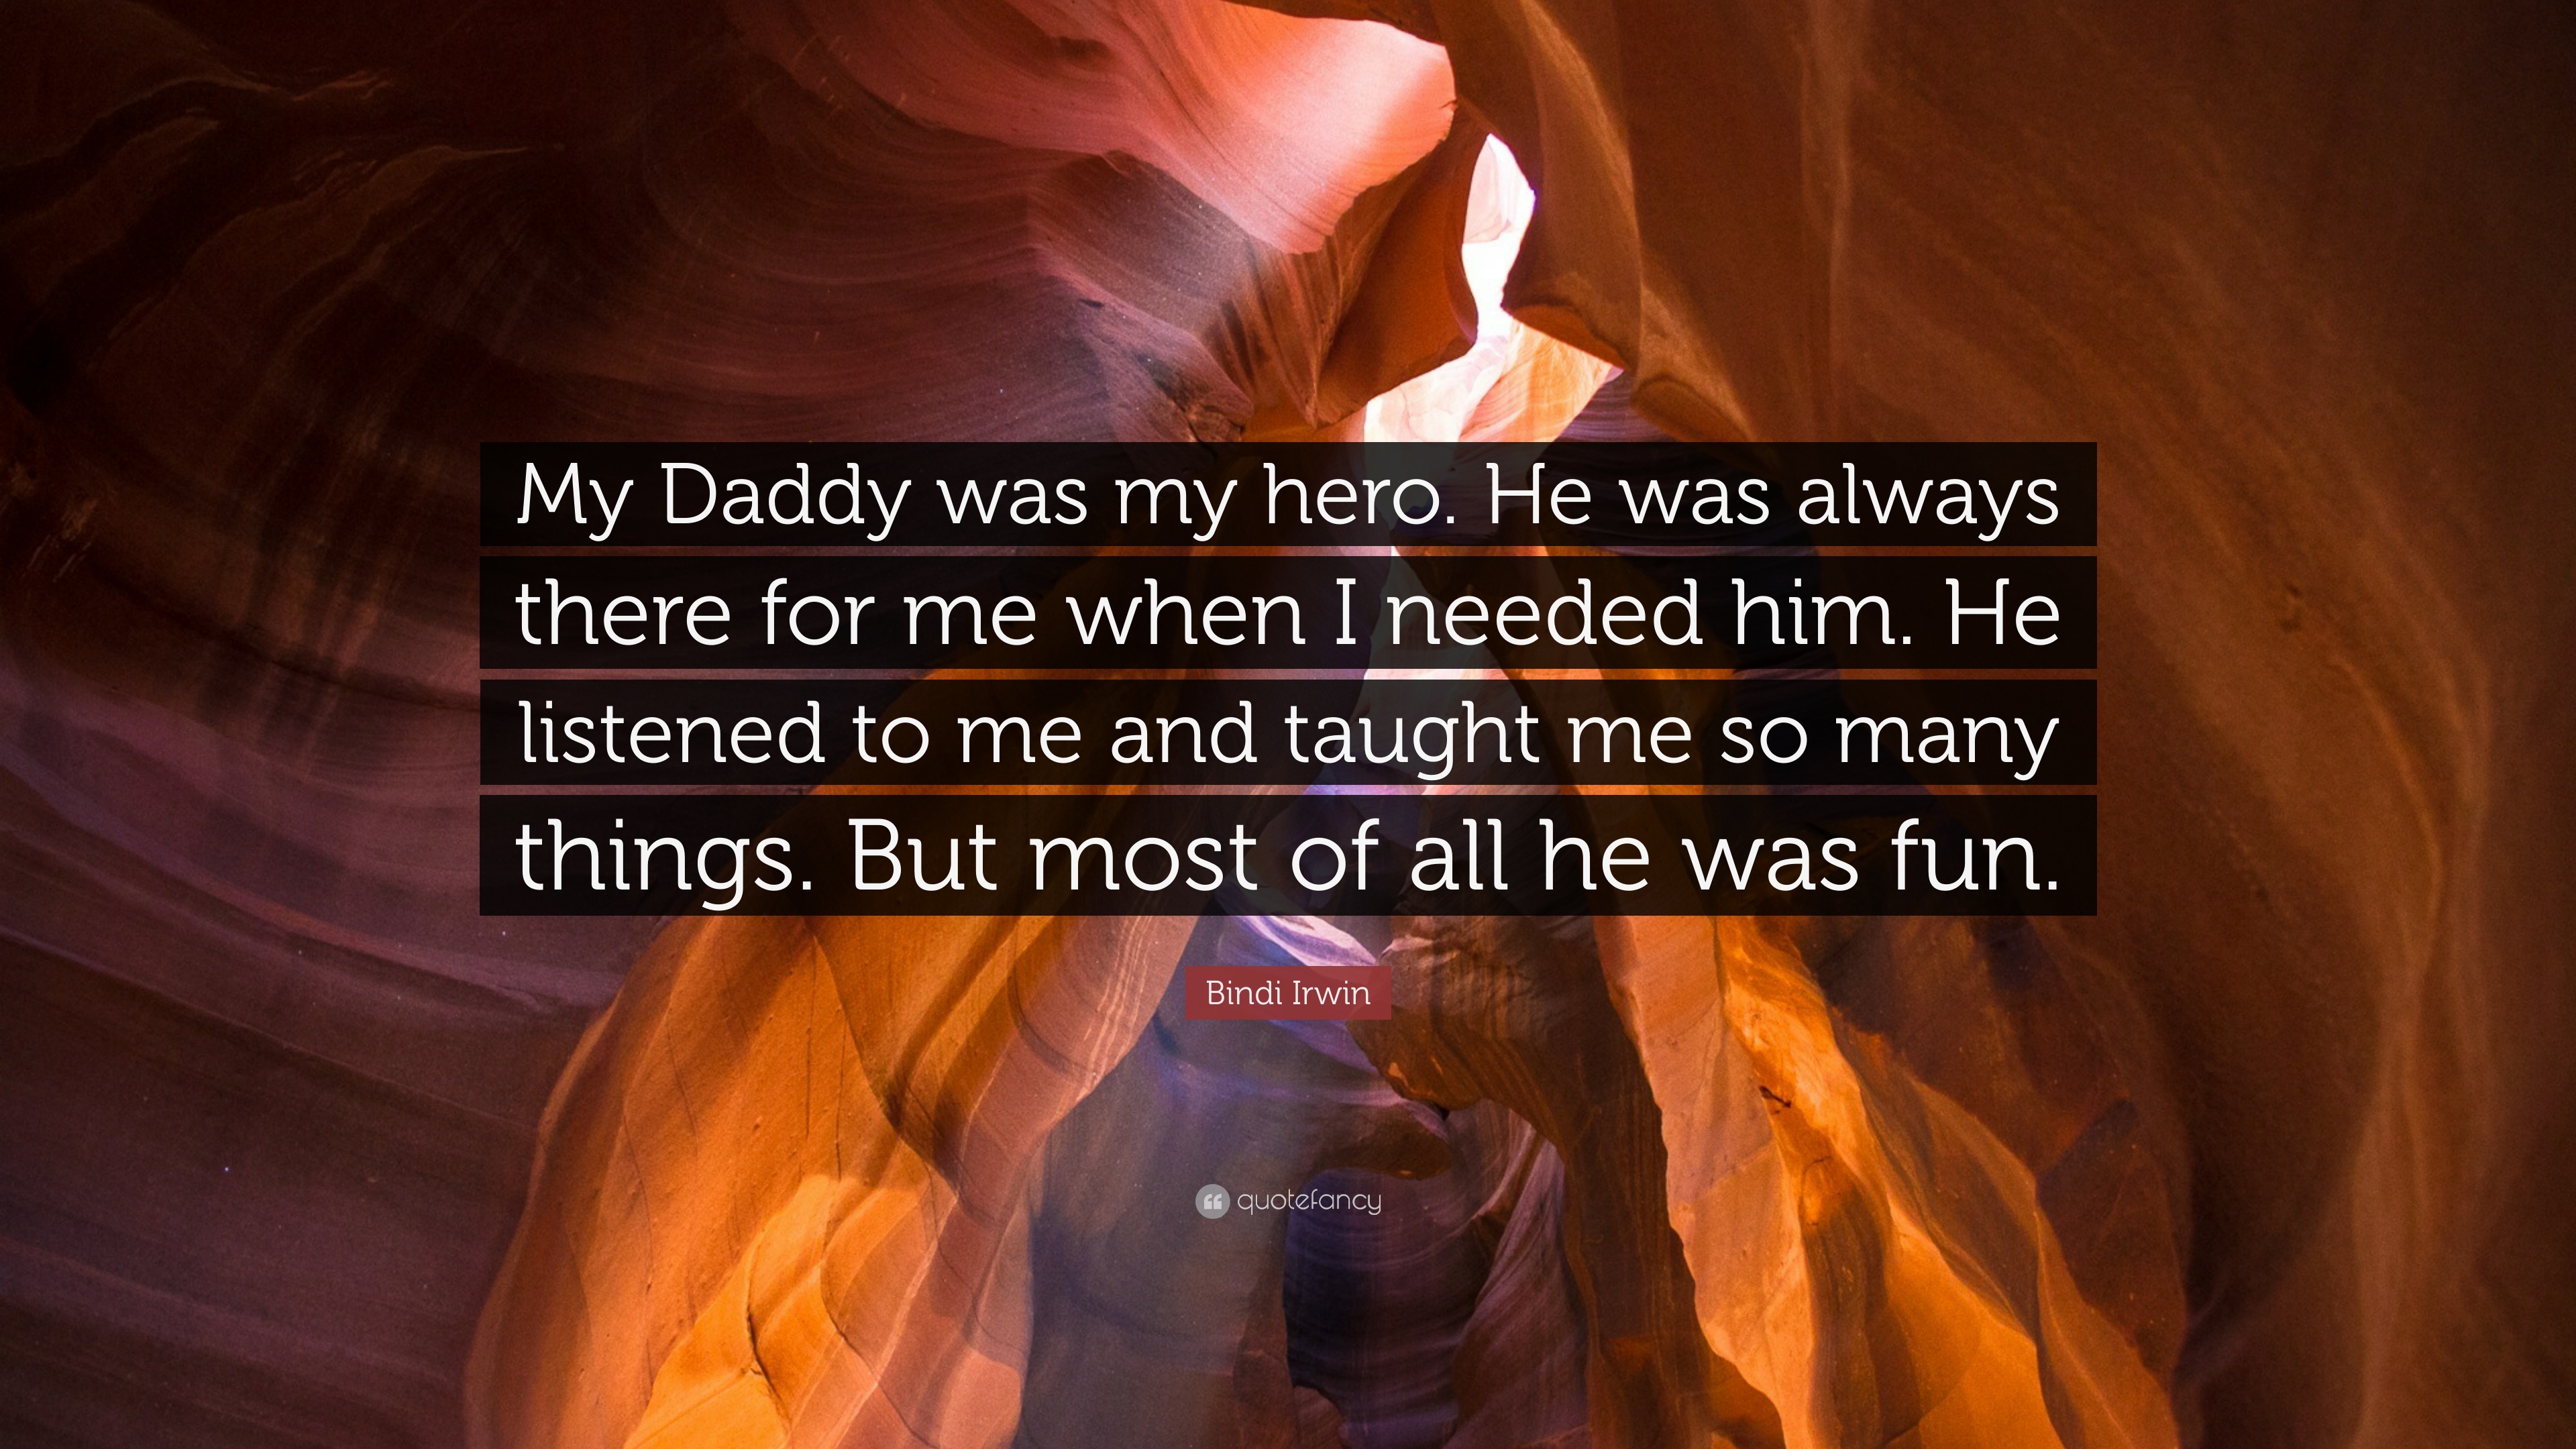 Bindi Irwin Quote: “My Daddy was my hero. He was always